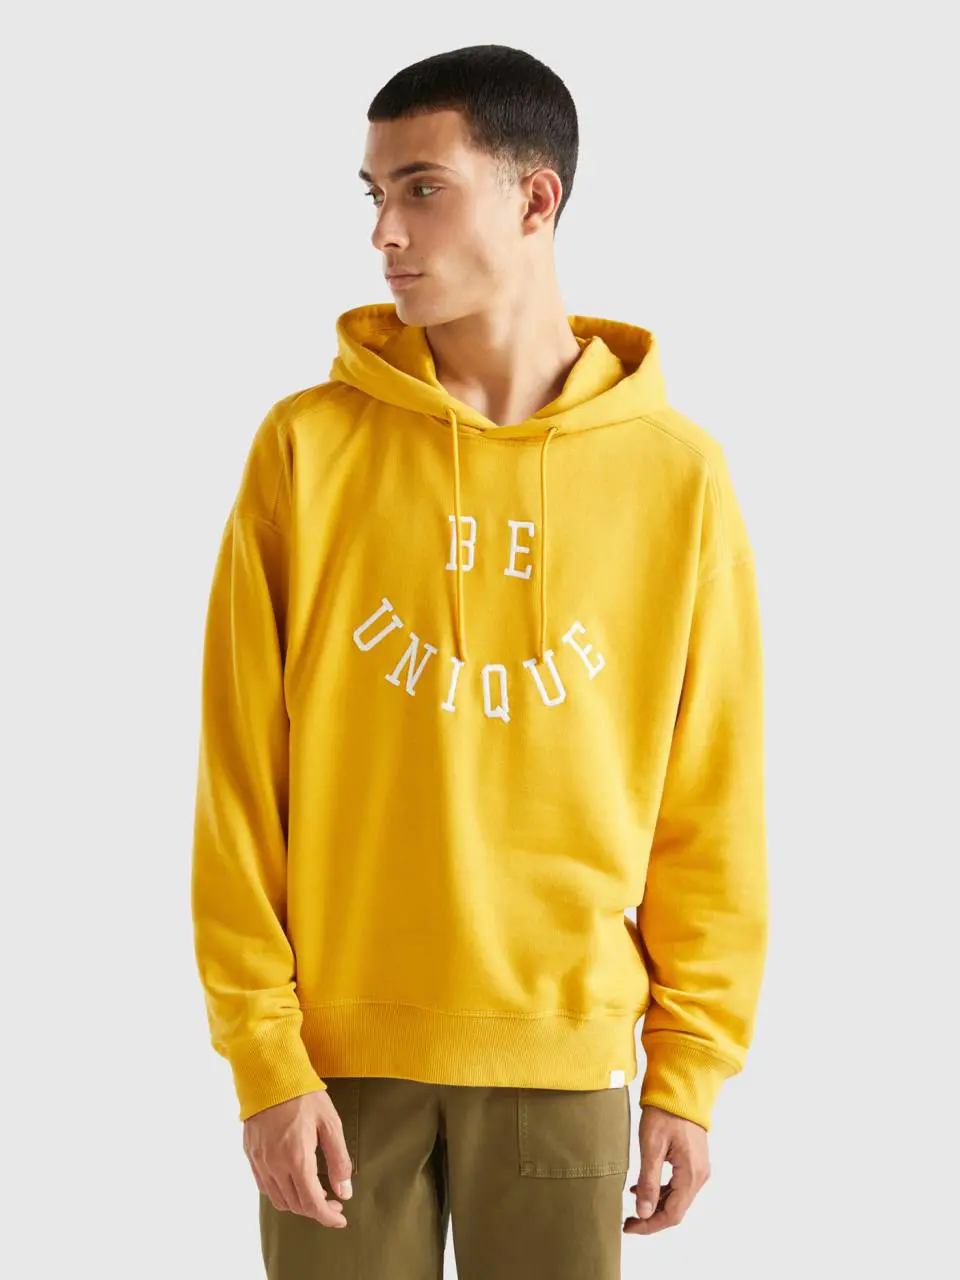 Benetton printed hoodie. 1